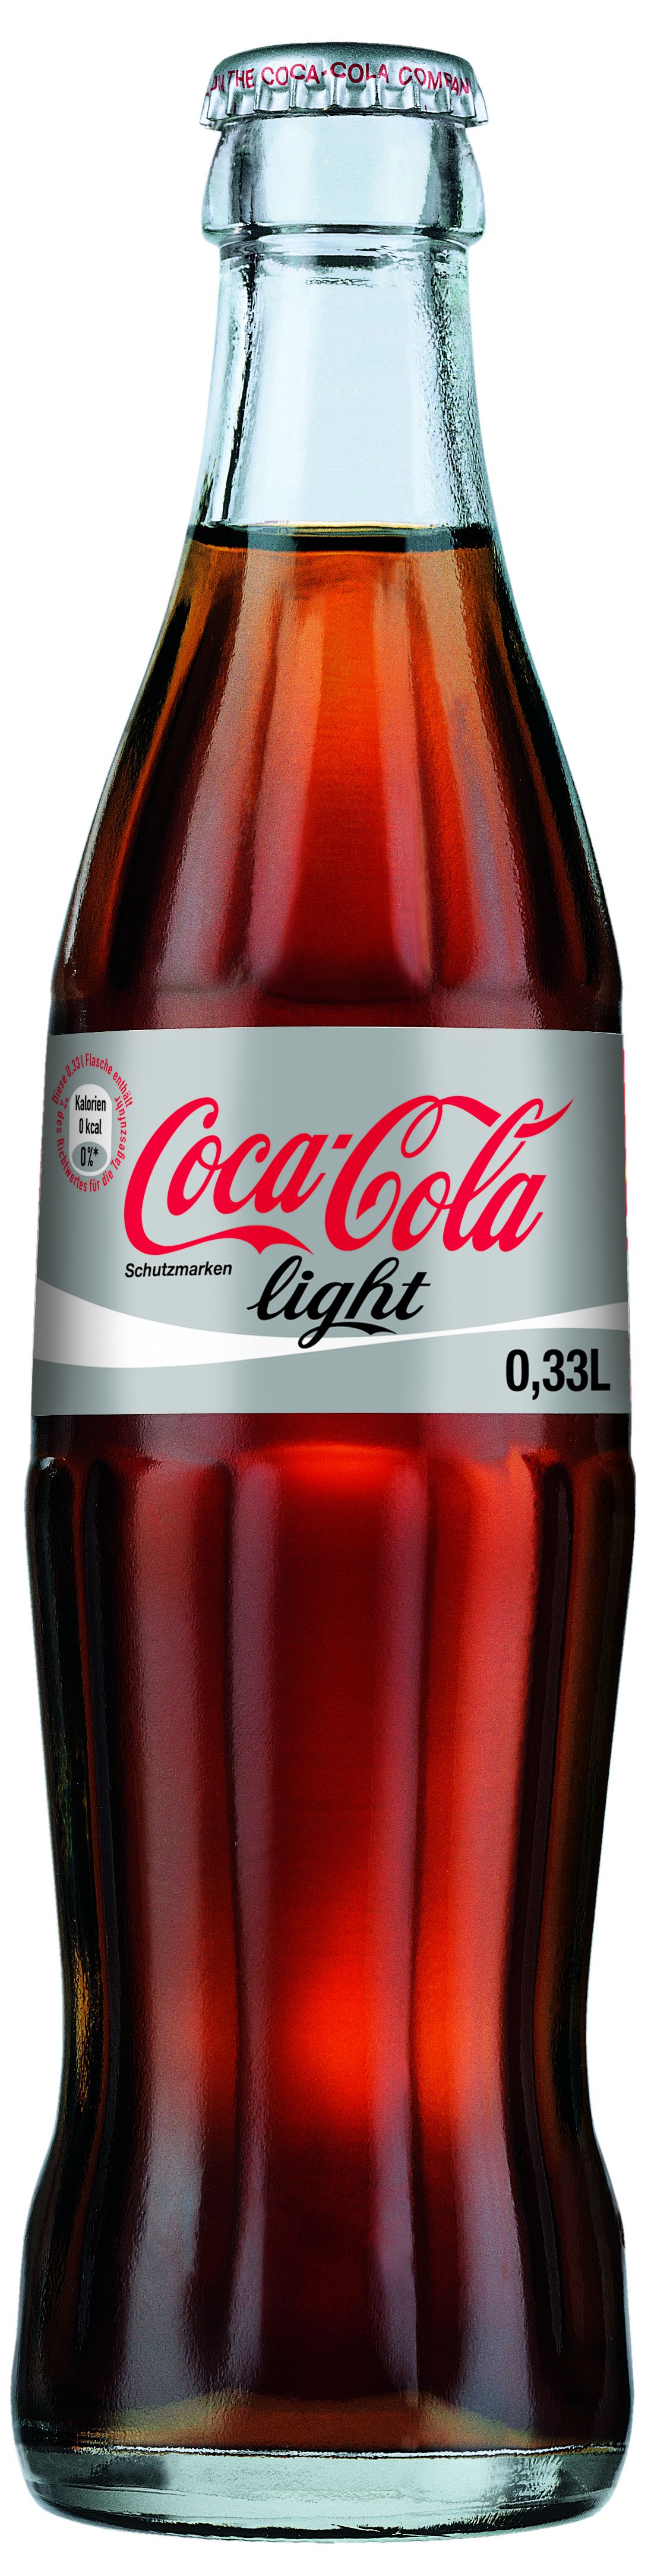 Coca Light-image